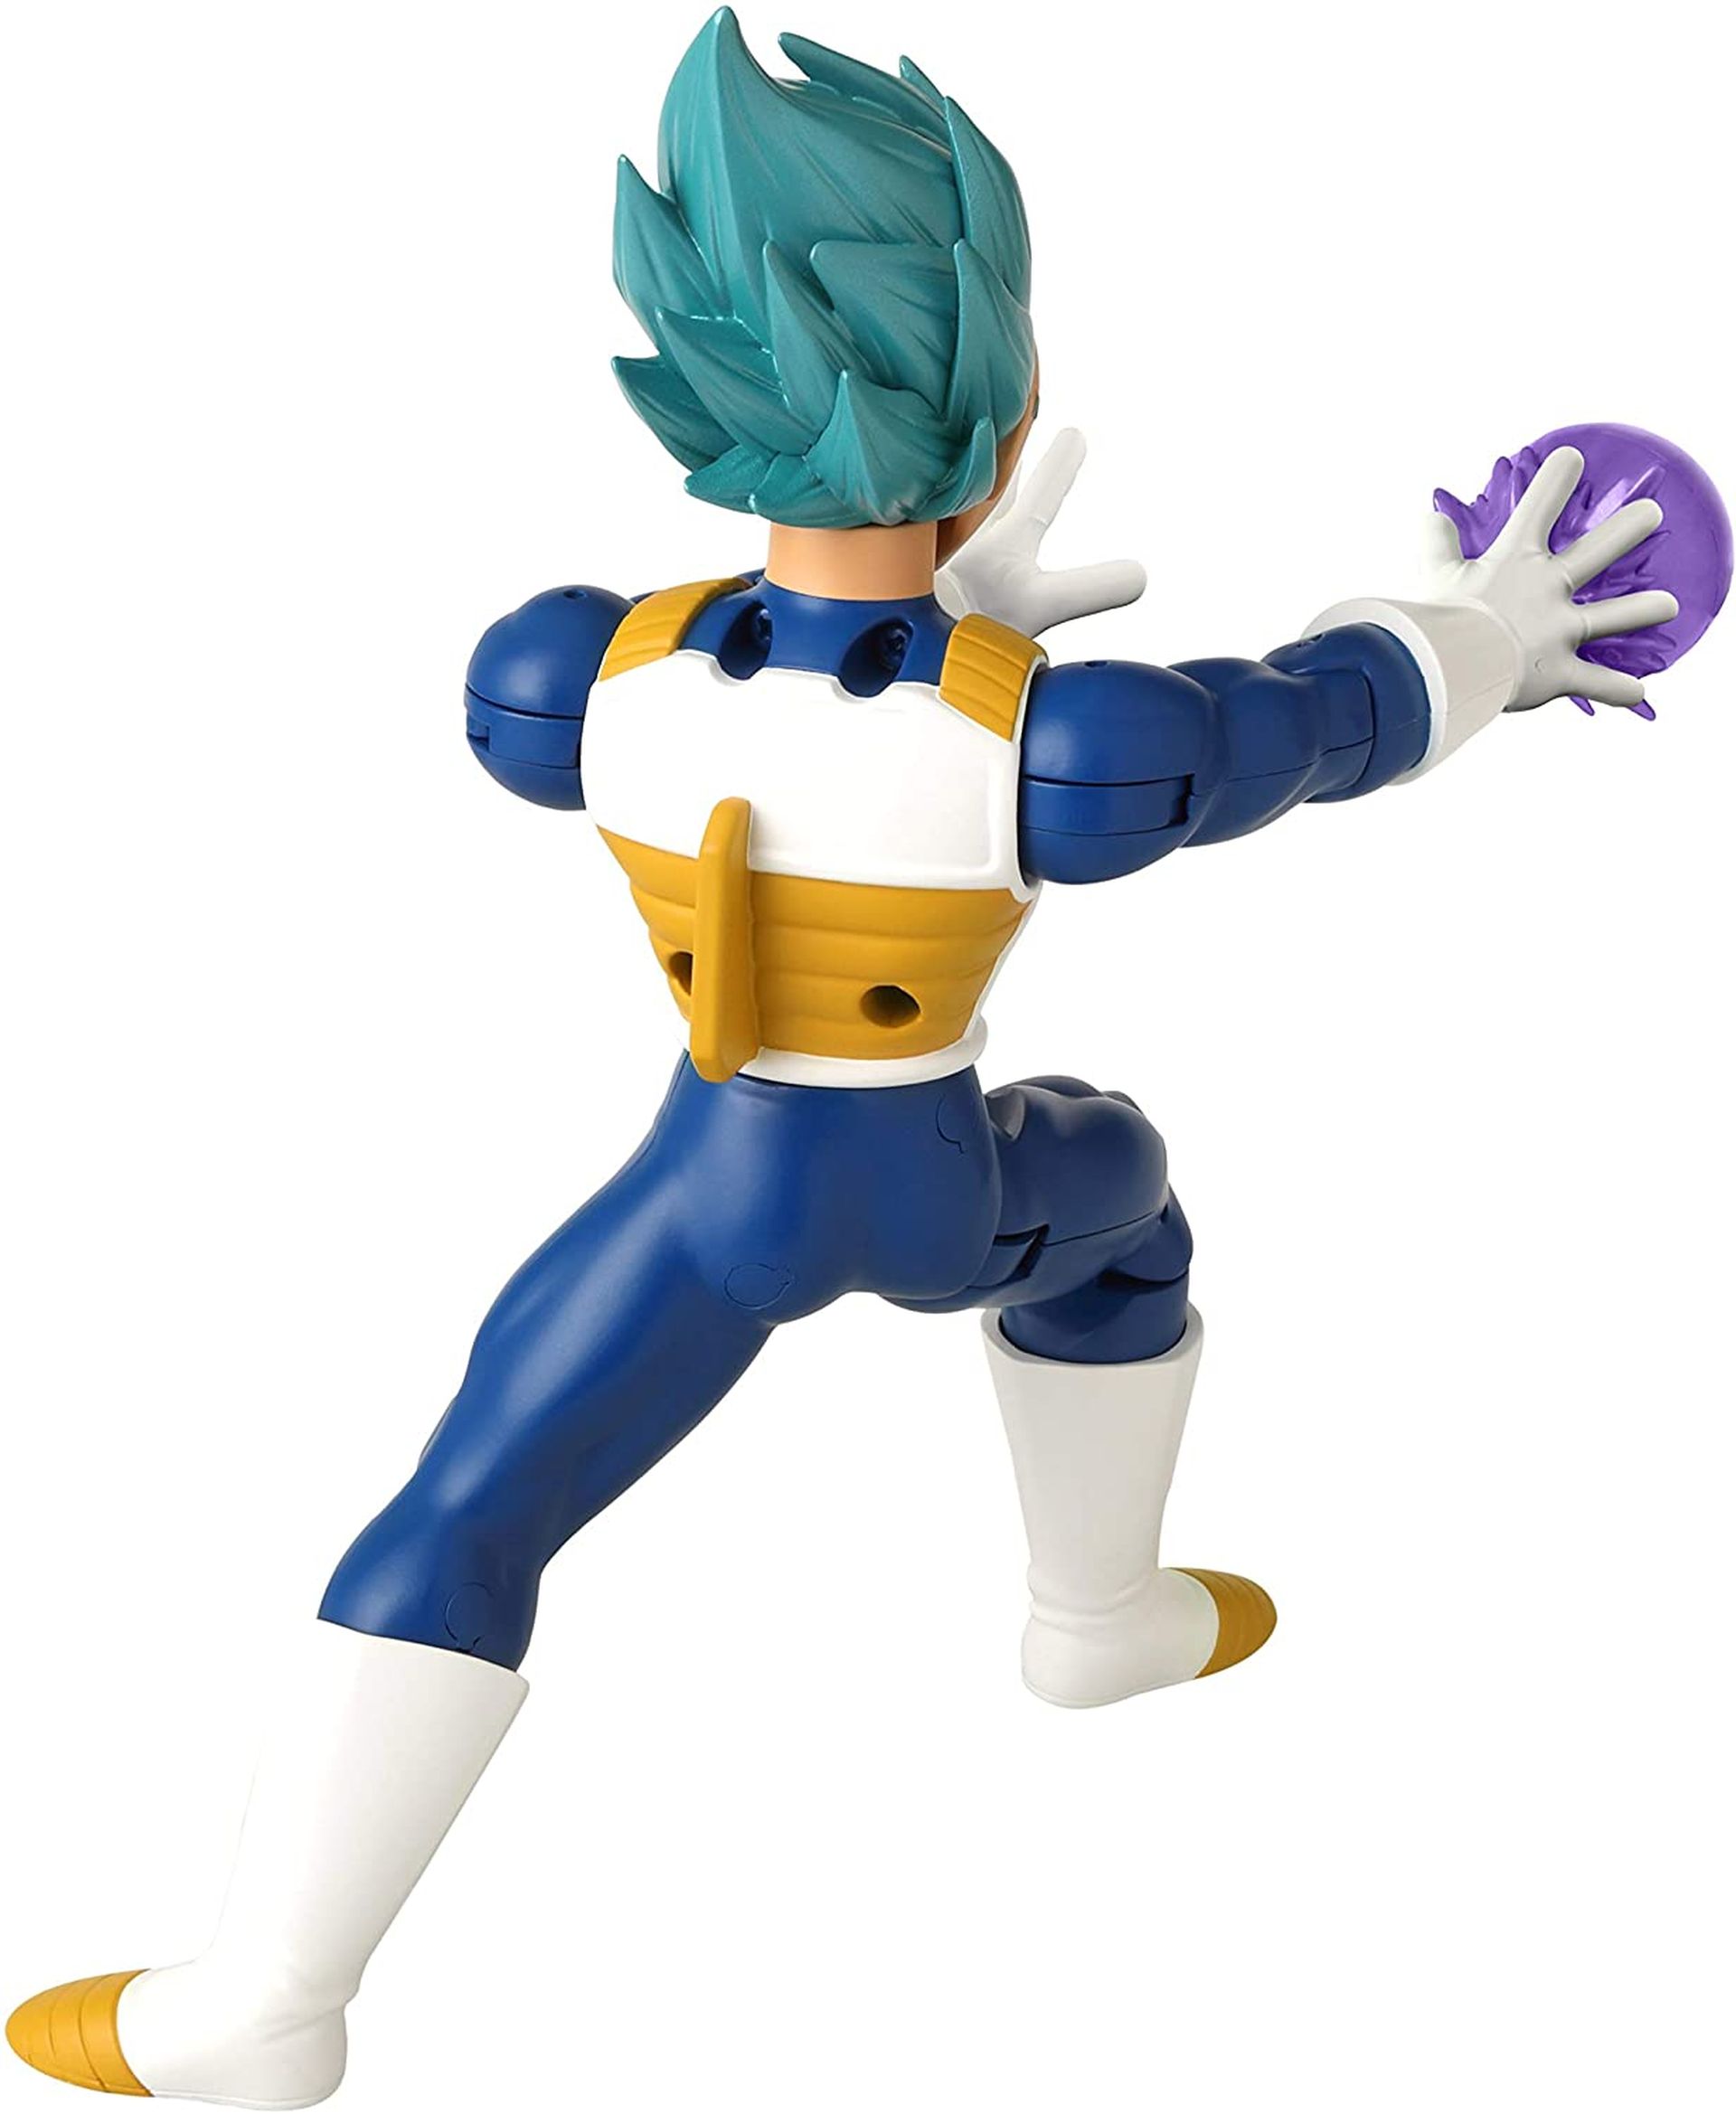 Dragon Ball Attack Super Saiyan Blue Vegeta 7-Inch Action Figure